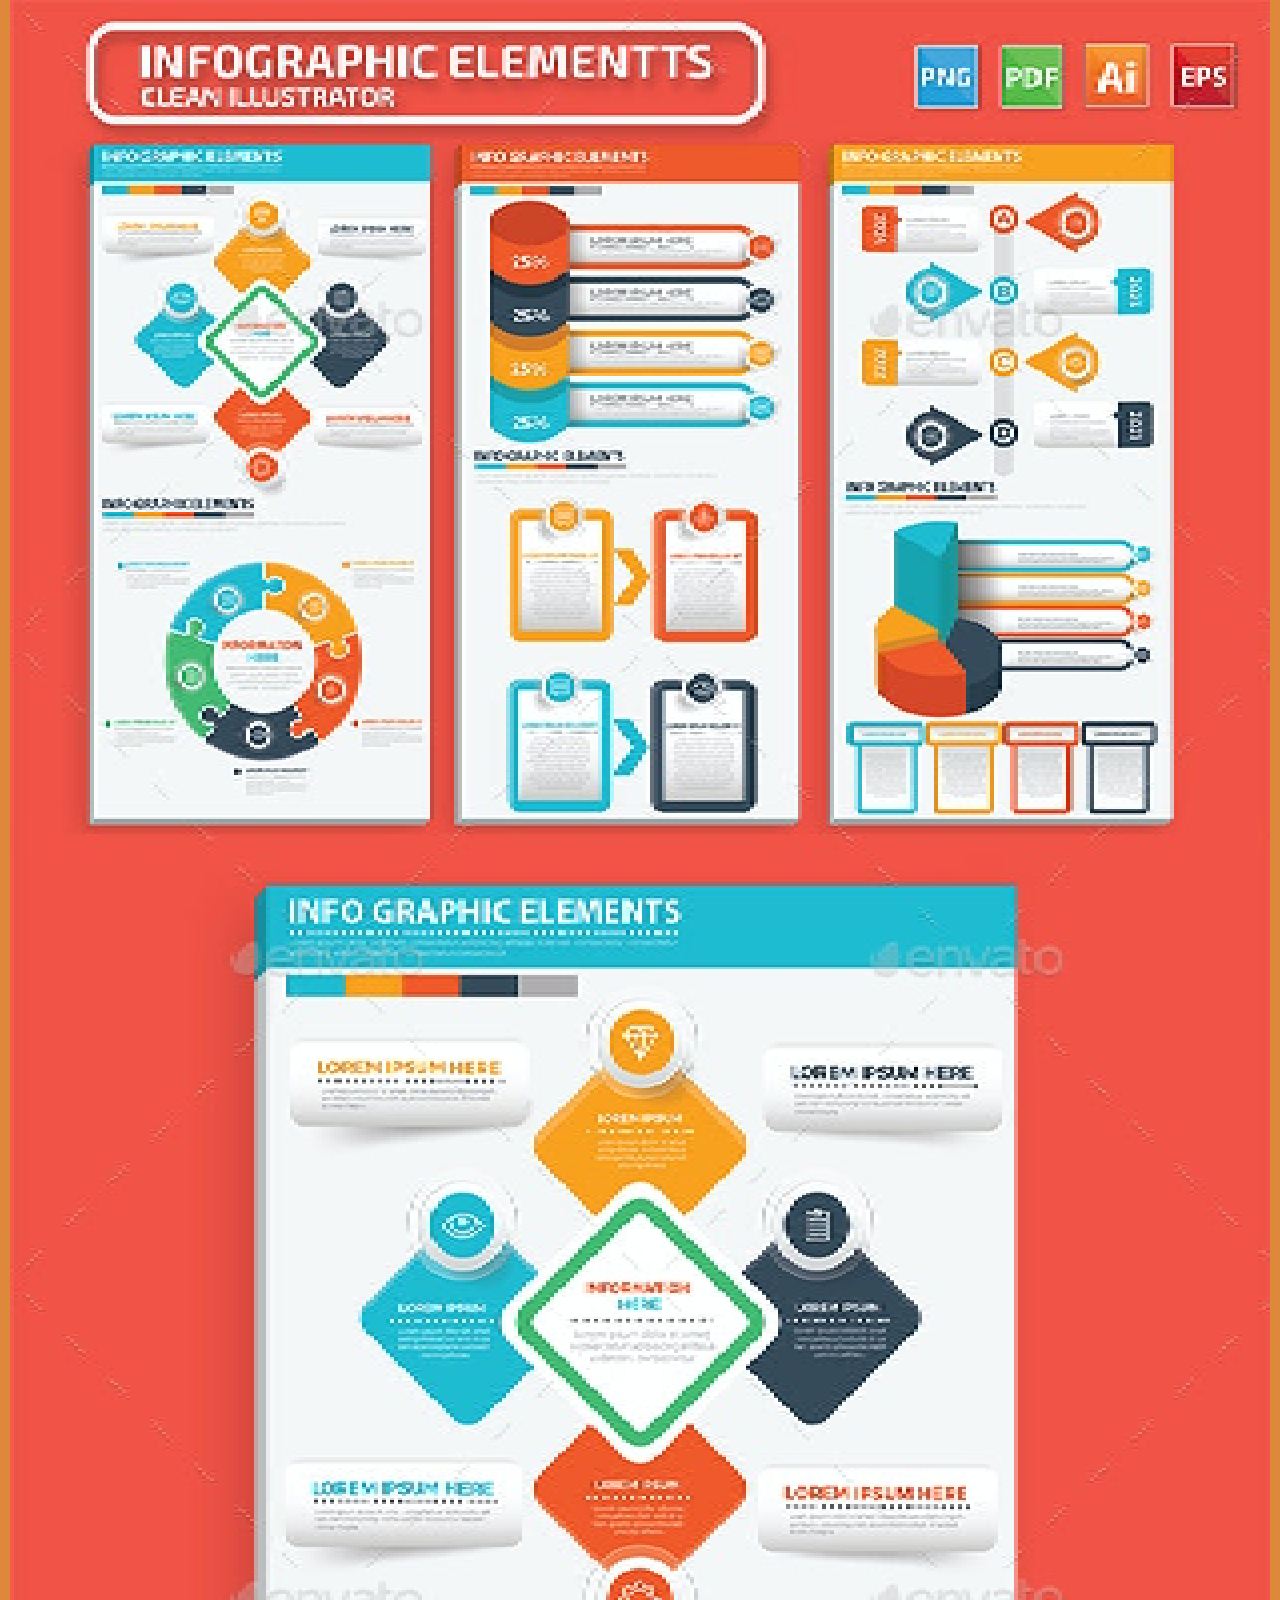 Infographics design pinterest image.